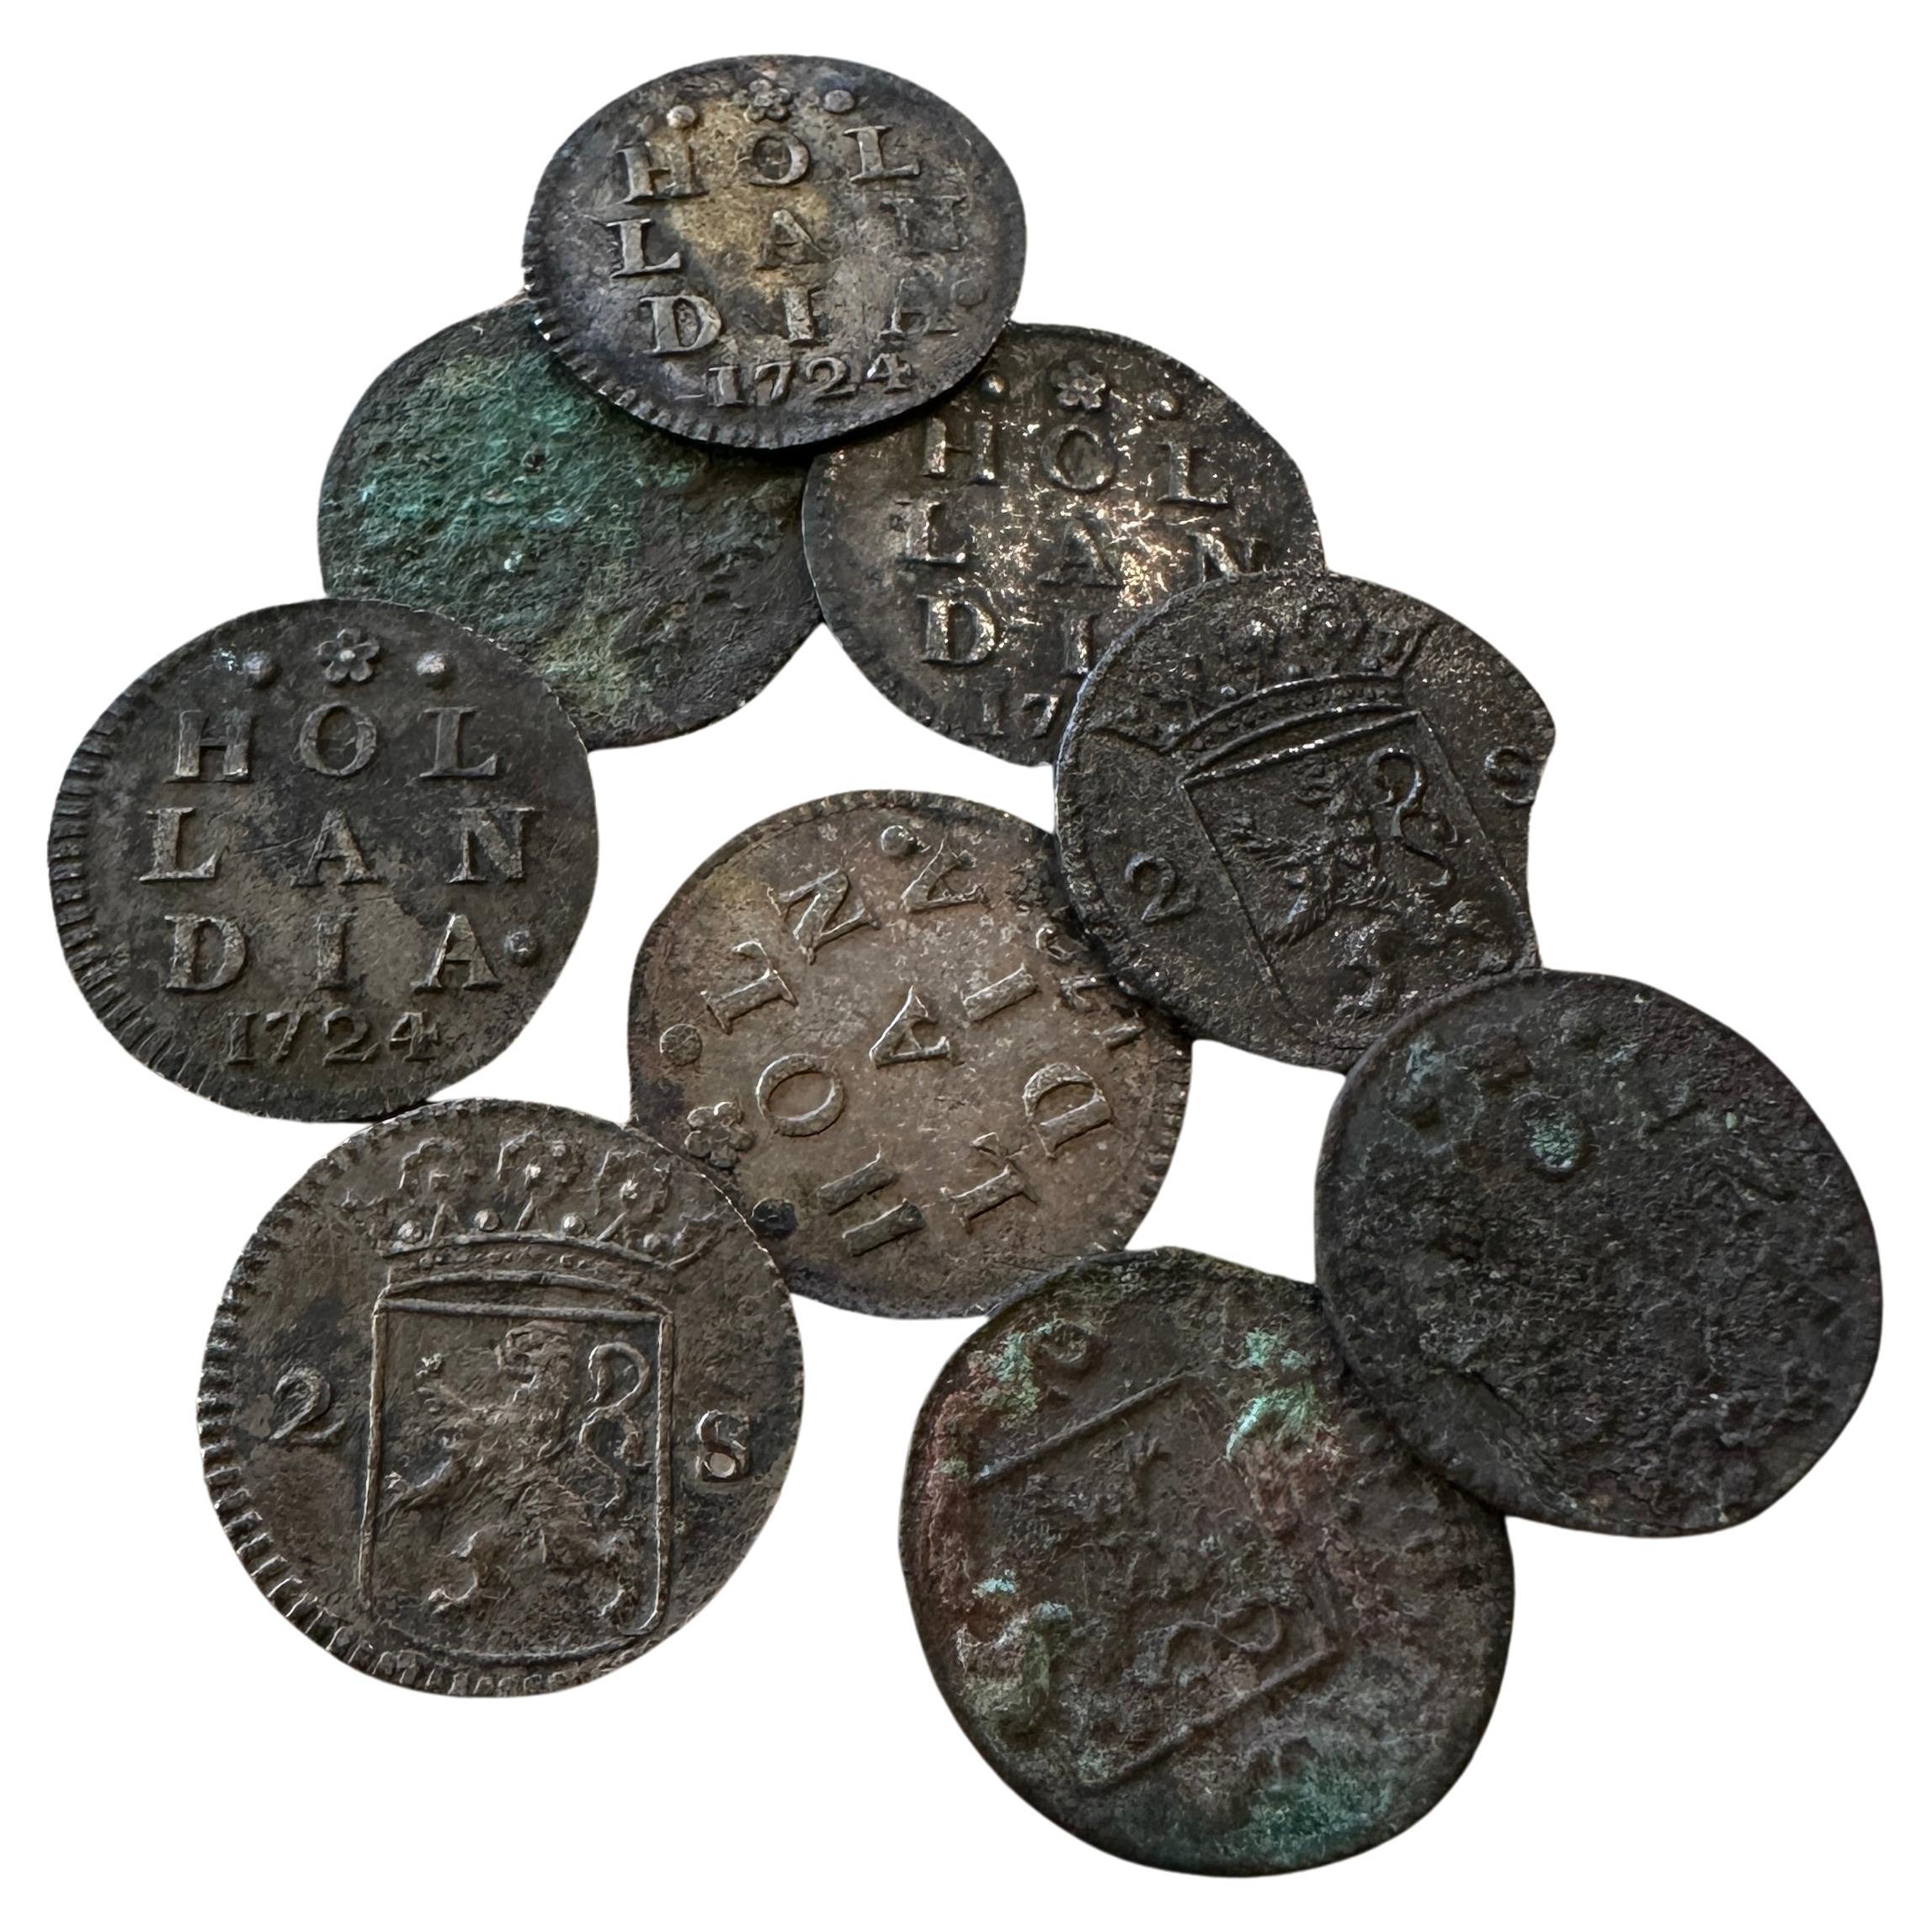 Dutch VOC Silver Shipwreck Treasure Coins From The Akerendam Shipwreck 1724 For Sale